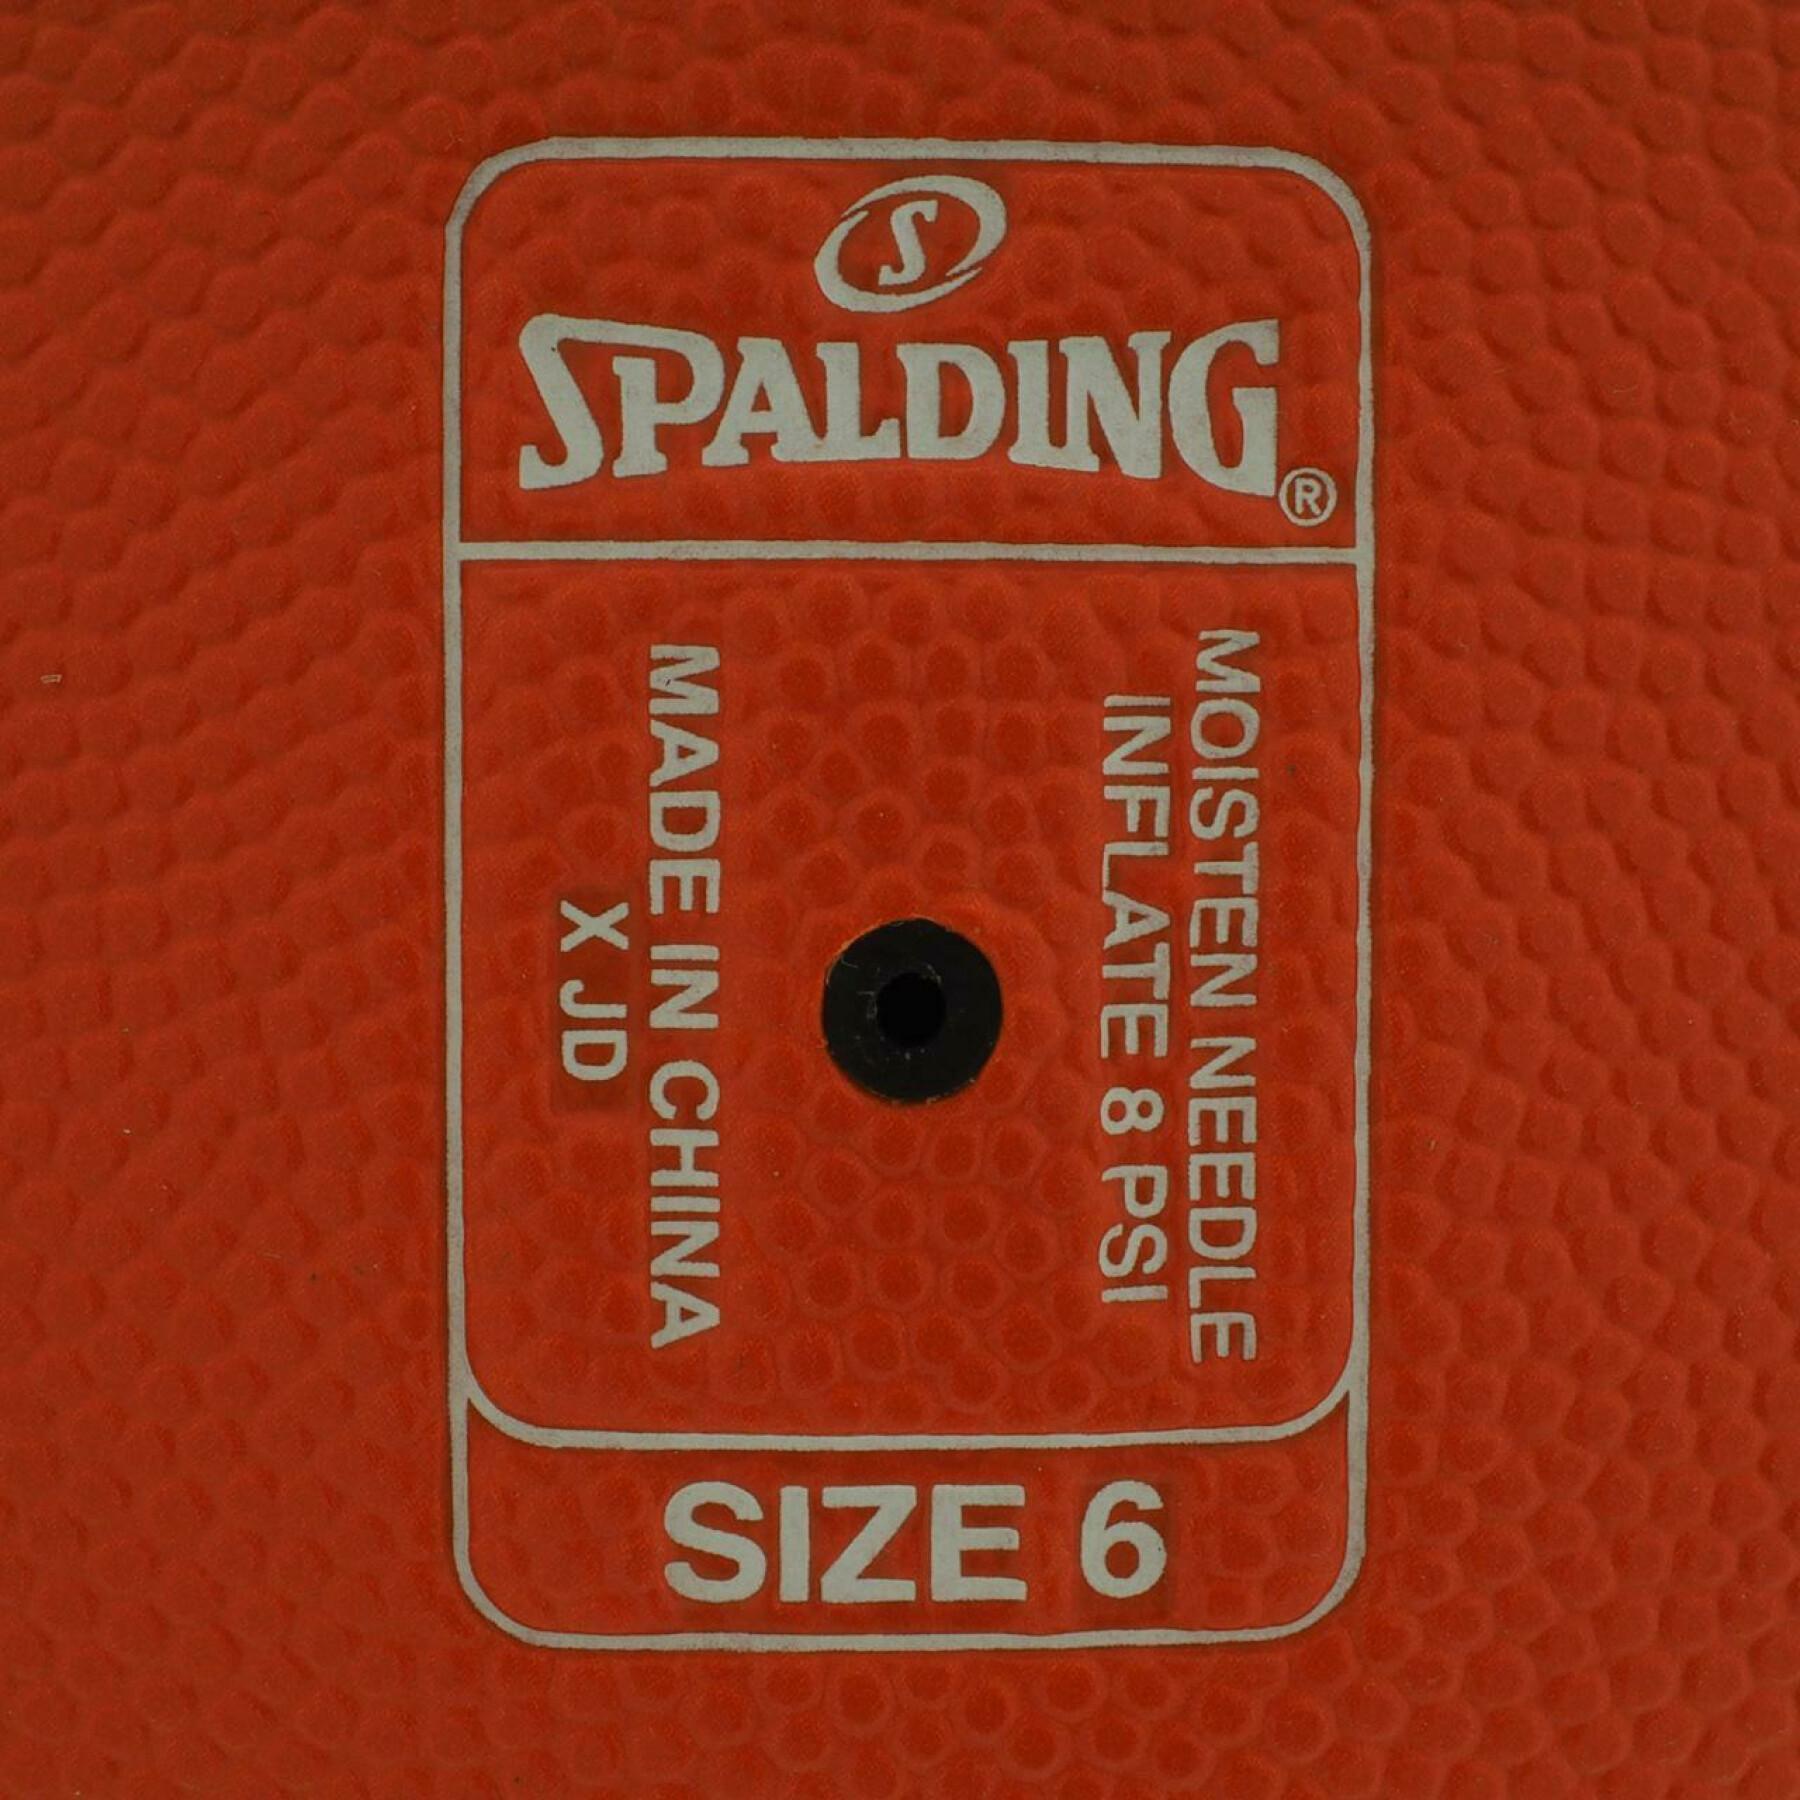 Balon Spalding LNB Tf350 (76-384z)